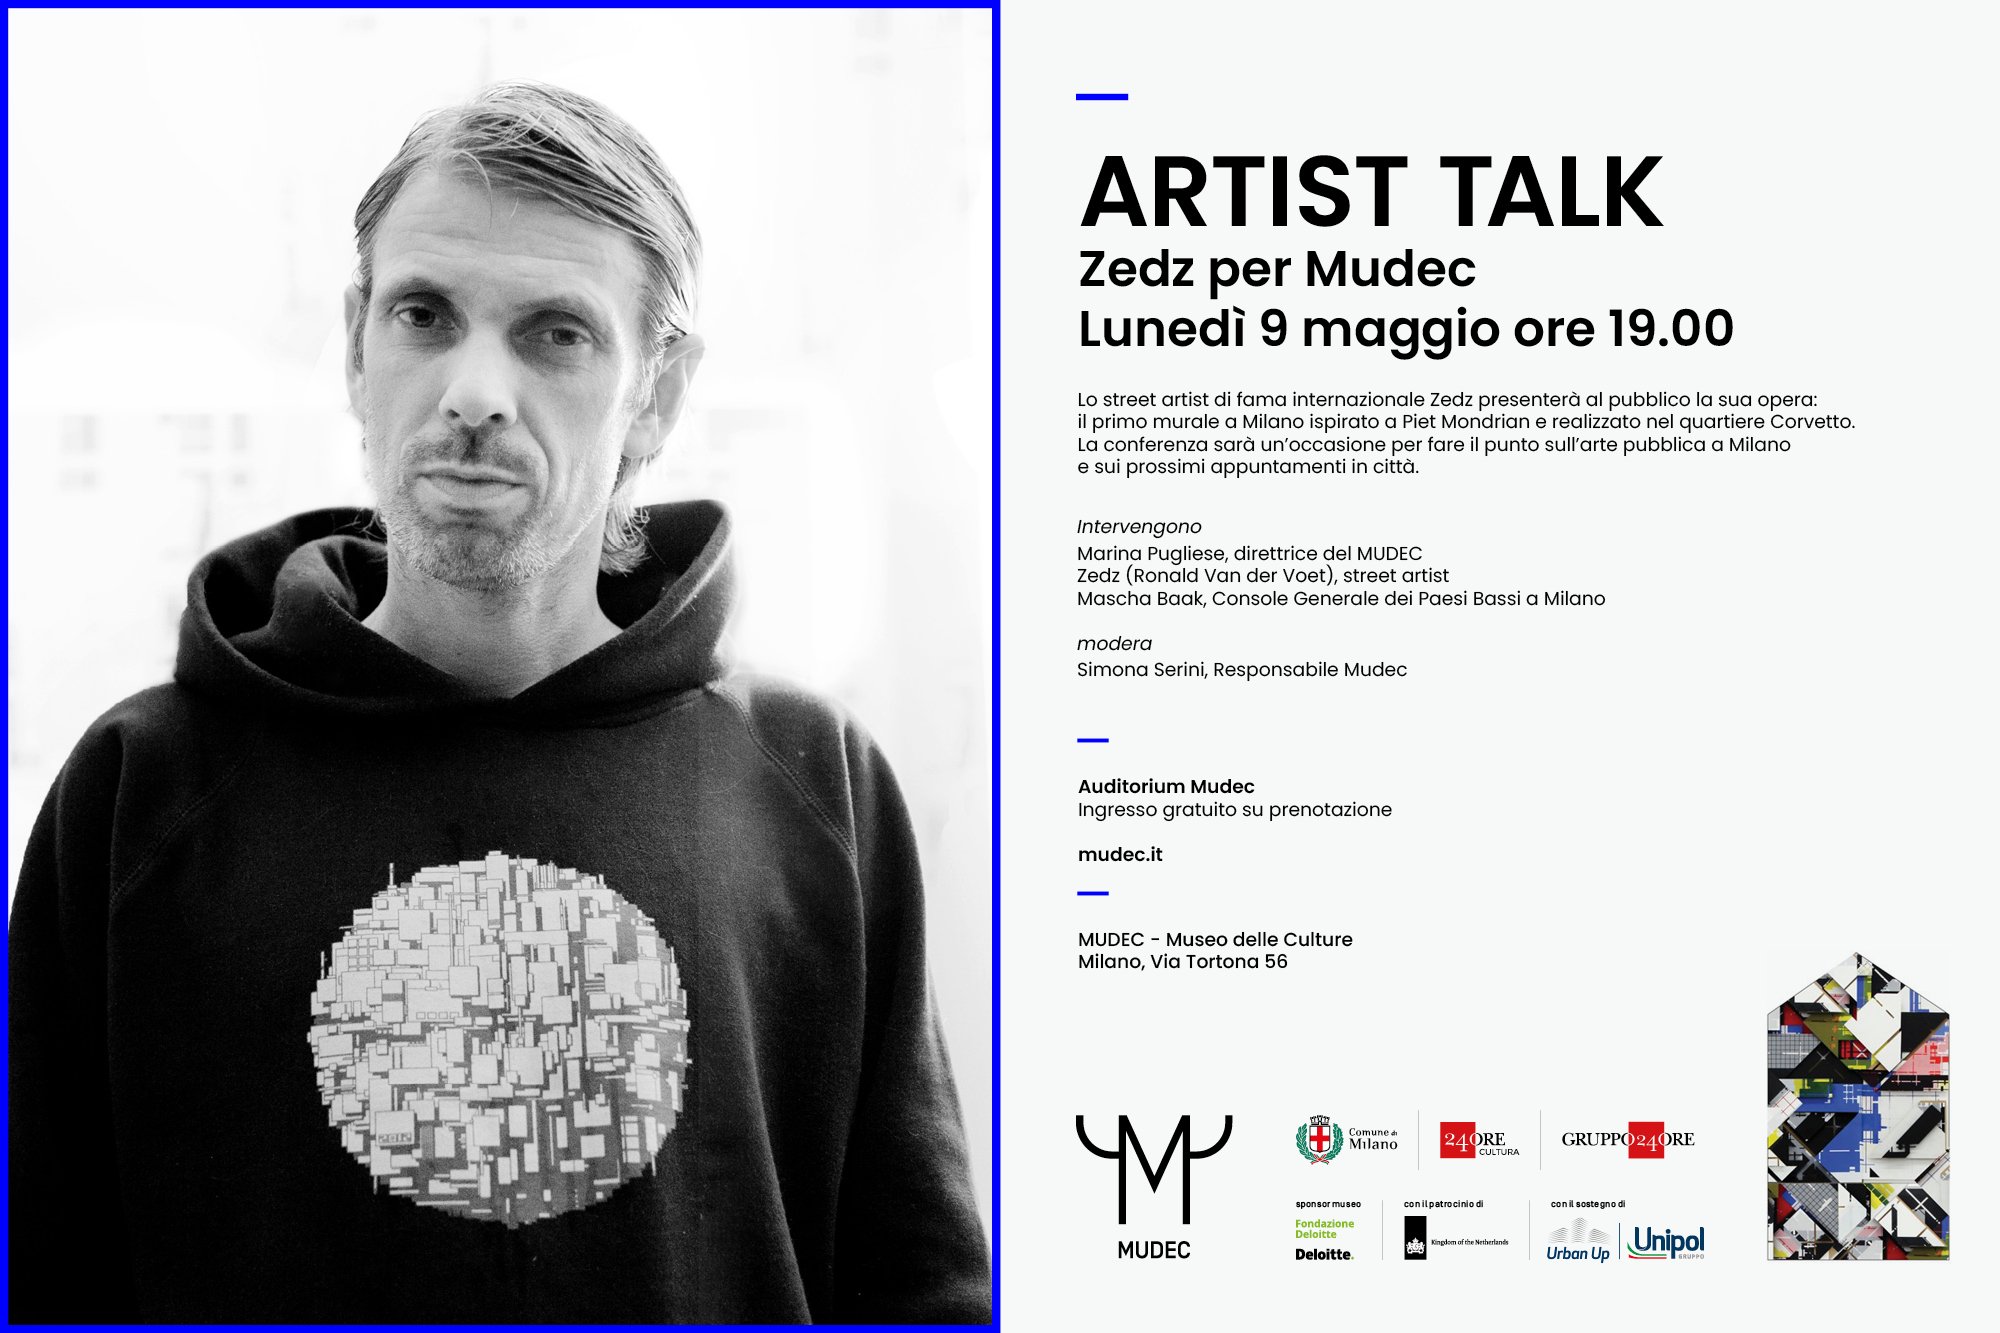 Zedz per Mudec - Artist Talk